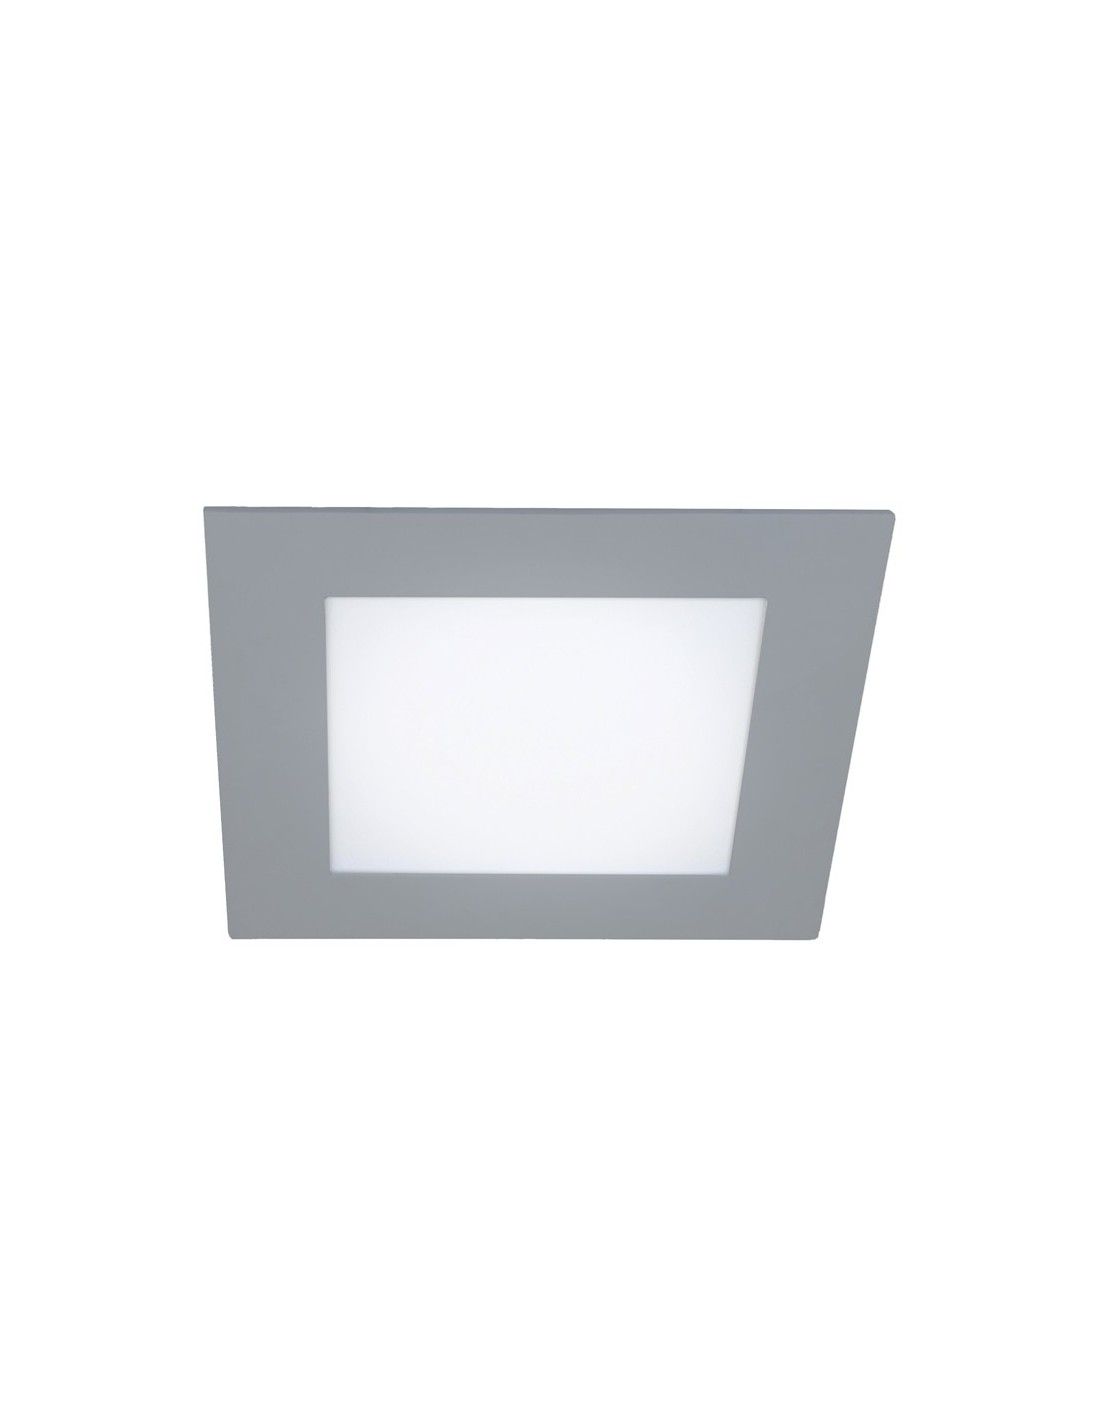 Downlight de superficie LED 12W Know redondo gris - Cristalrecord